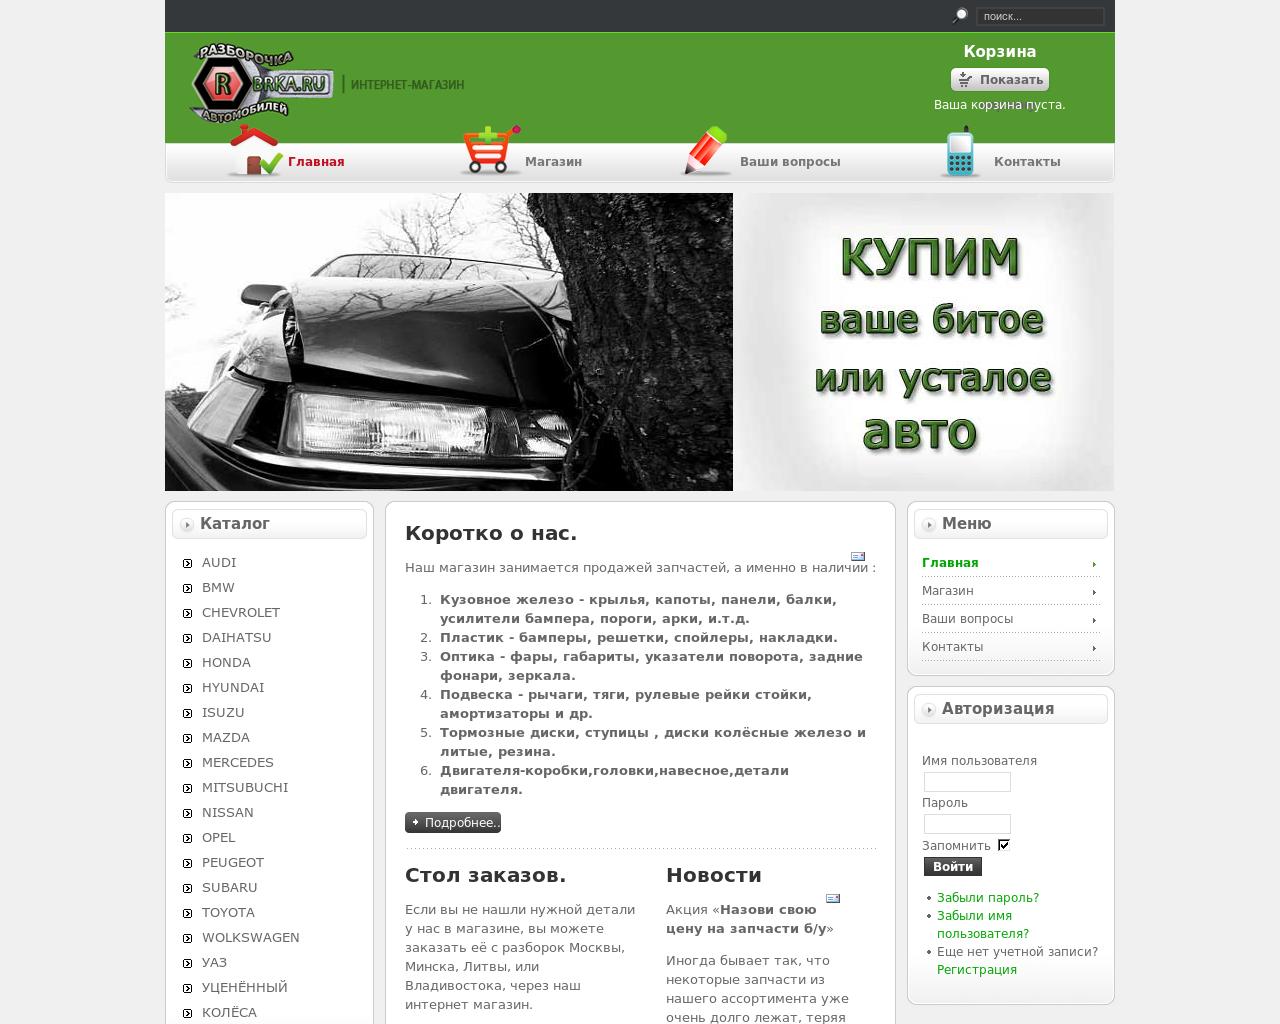 Изображение сайта rbrka.ru в разрешении 1280x1024